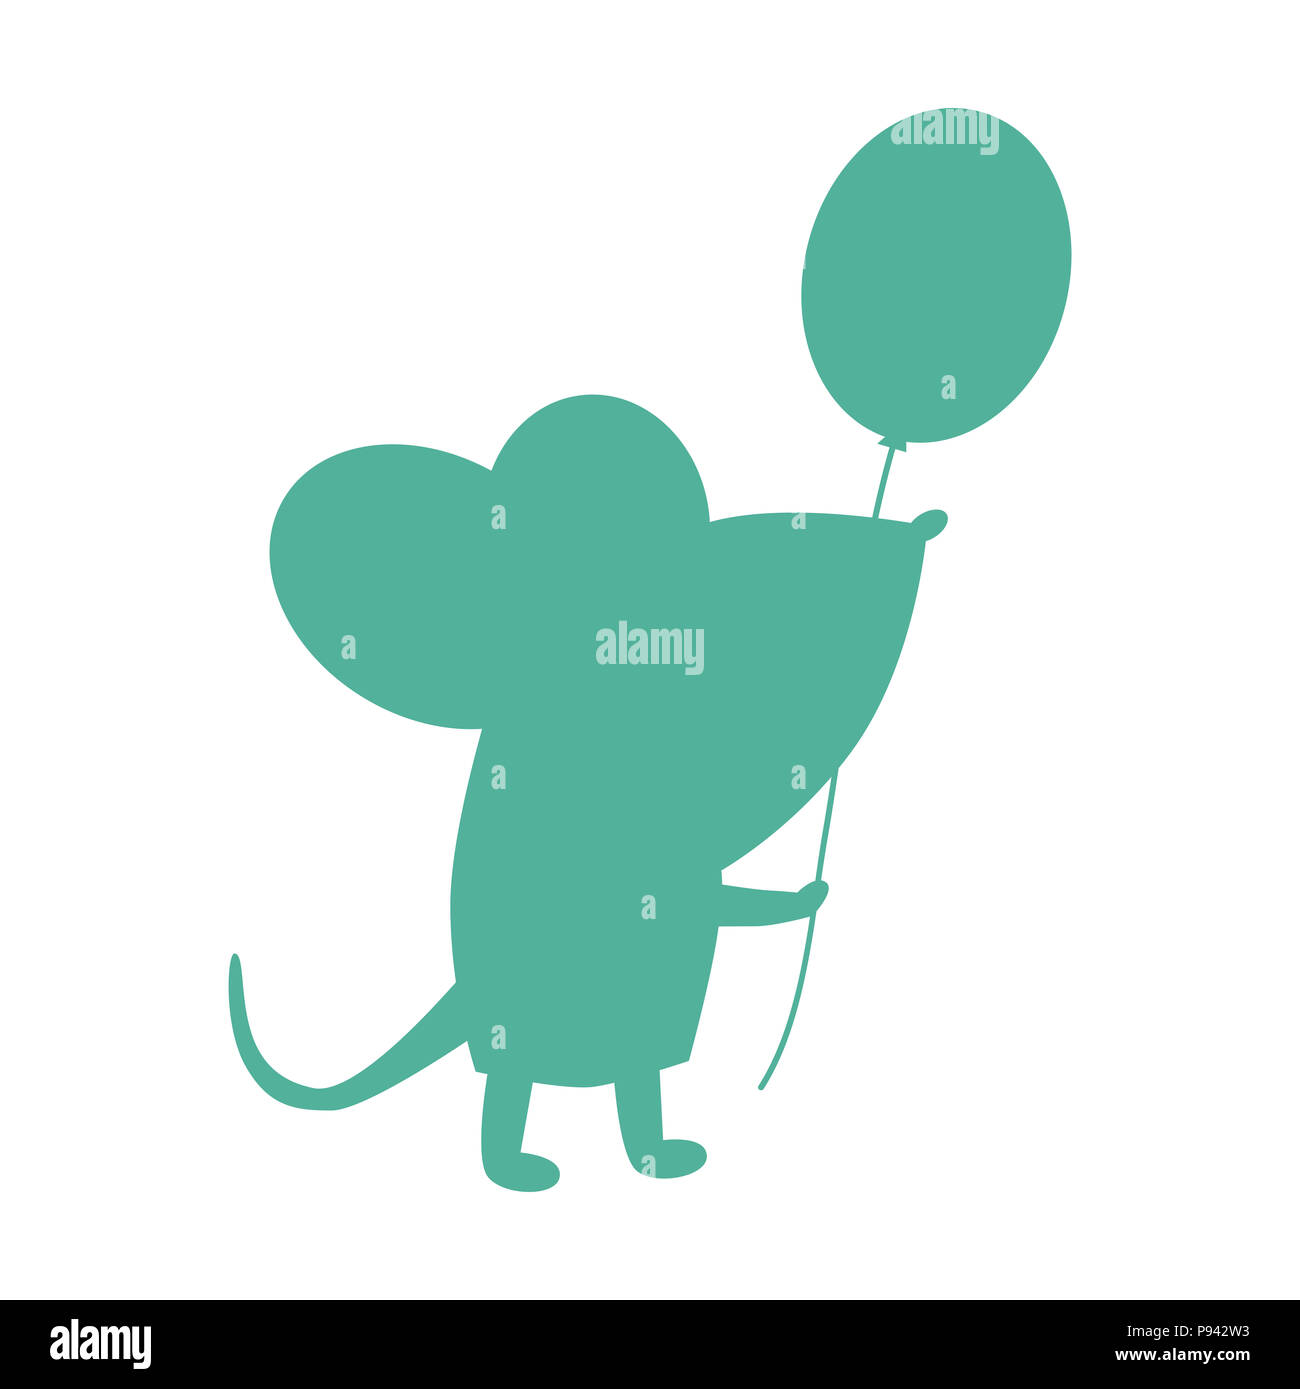 Mouse silhouette icon. Wild animals silhouette Illustration. Mouse symbol Stock Photo